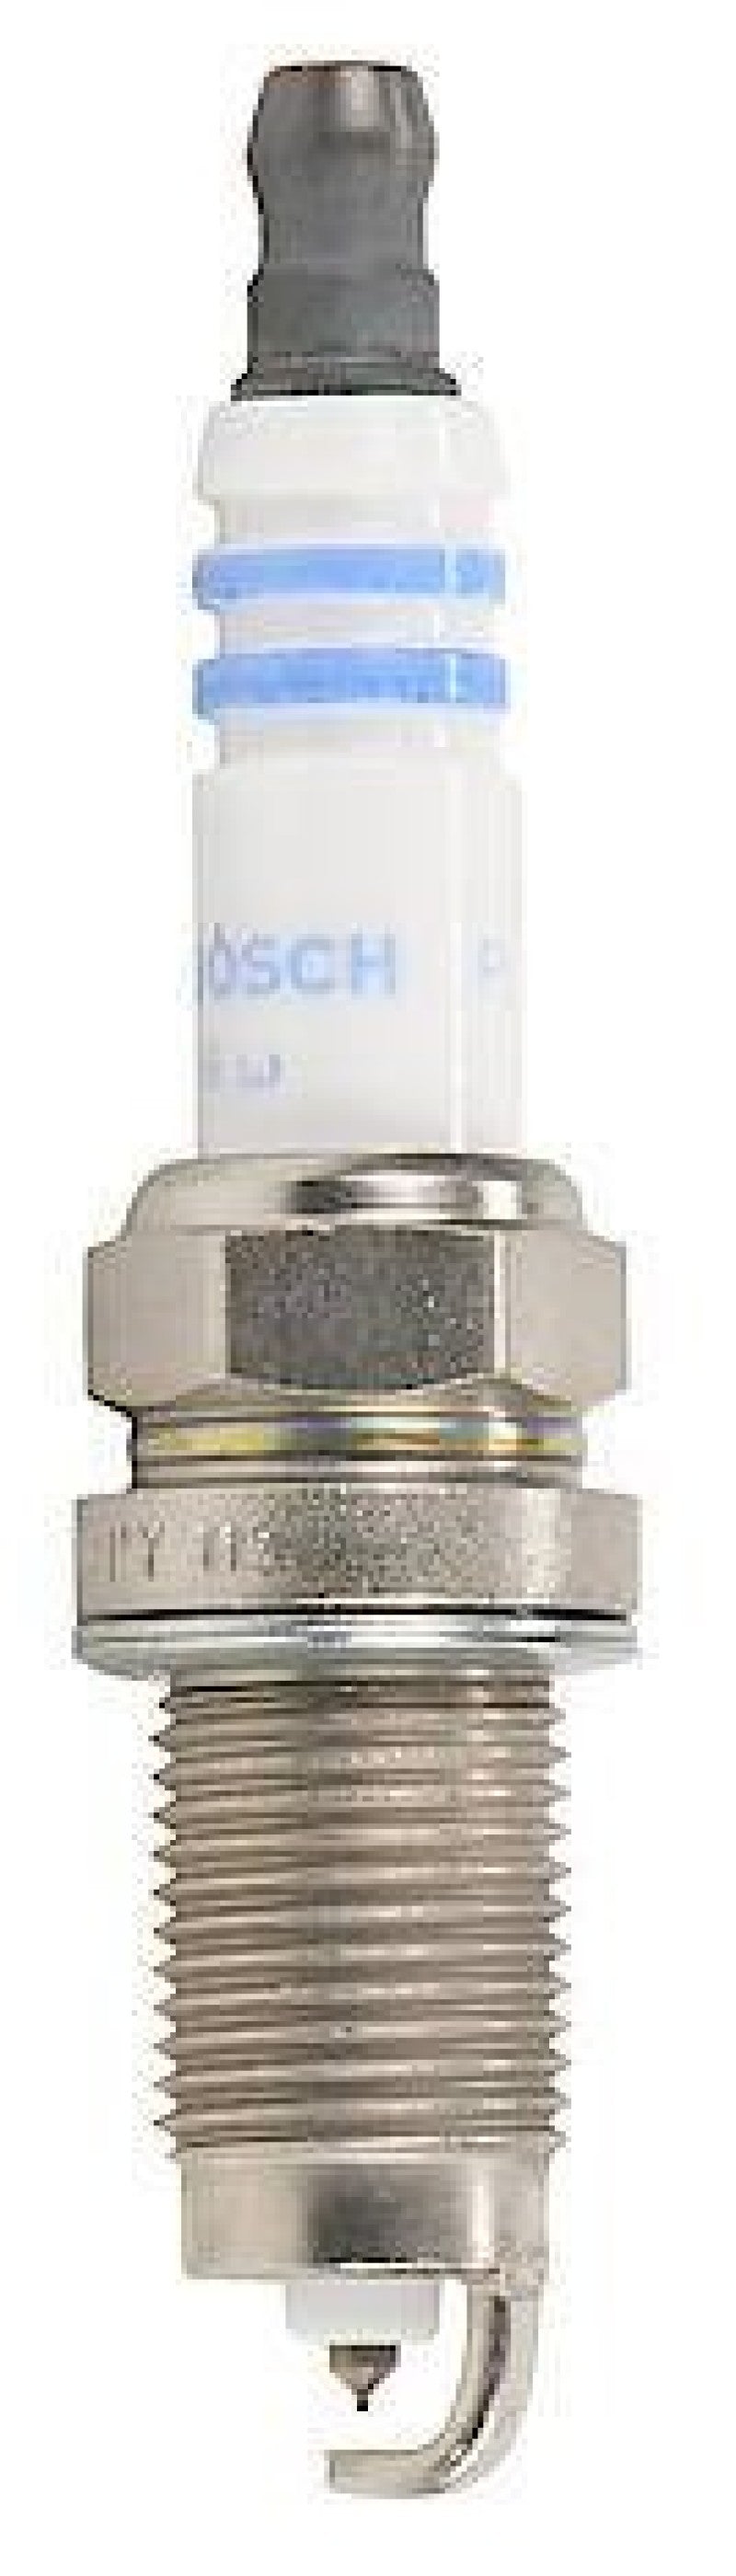 Bosch Suppressed Spark Plug (8165)